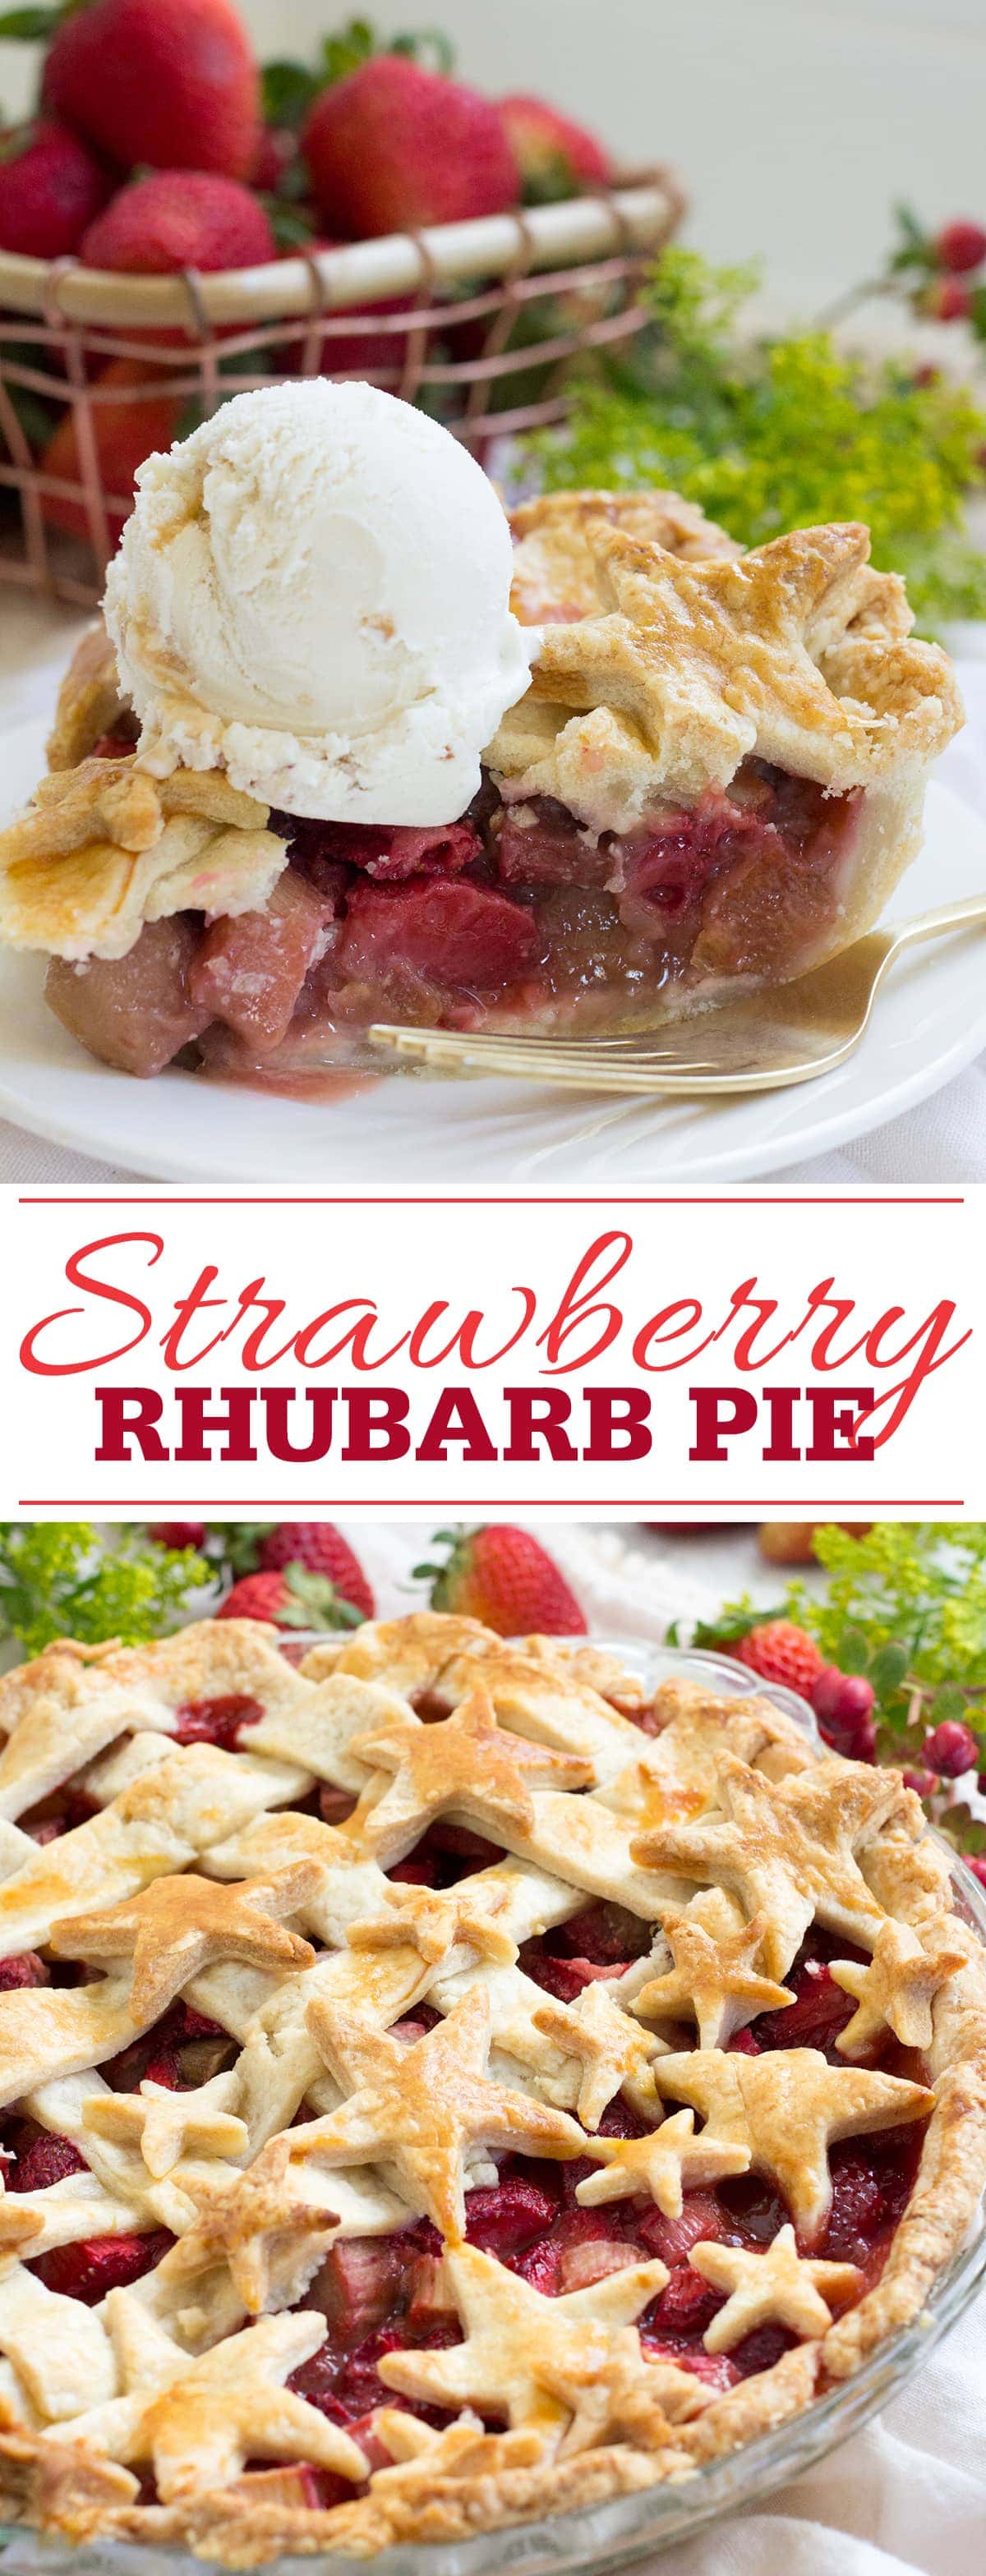 Strawberry Rhubarb Pie Pinterest